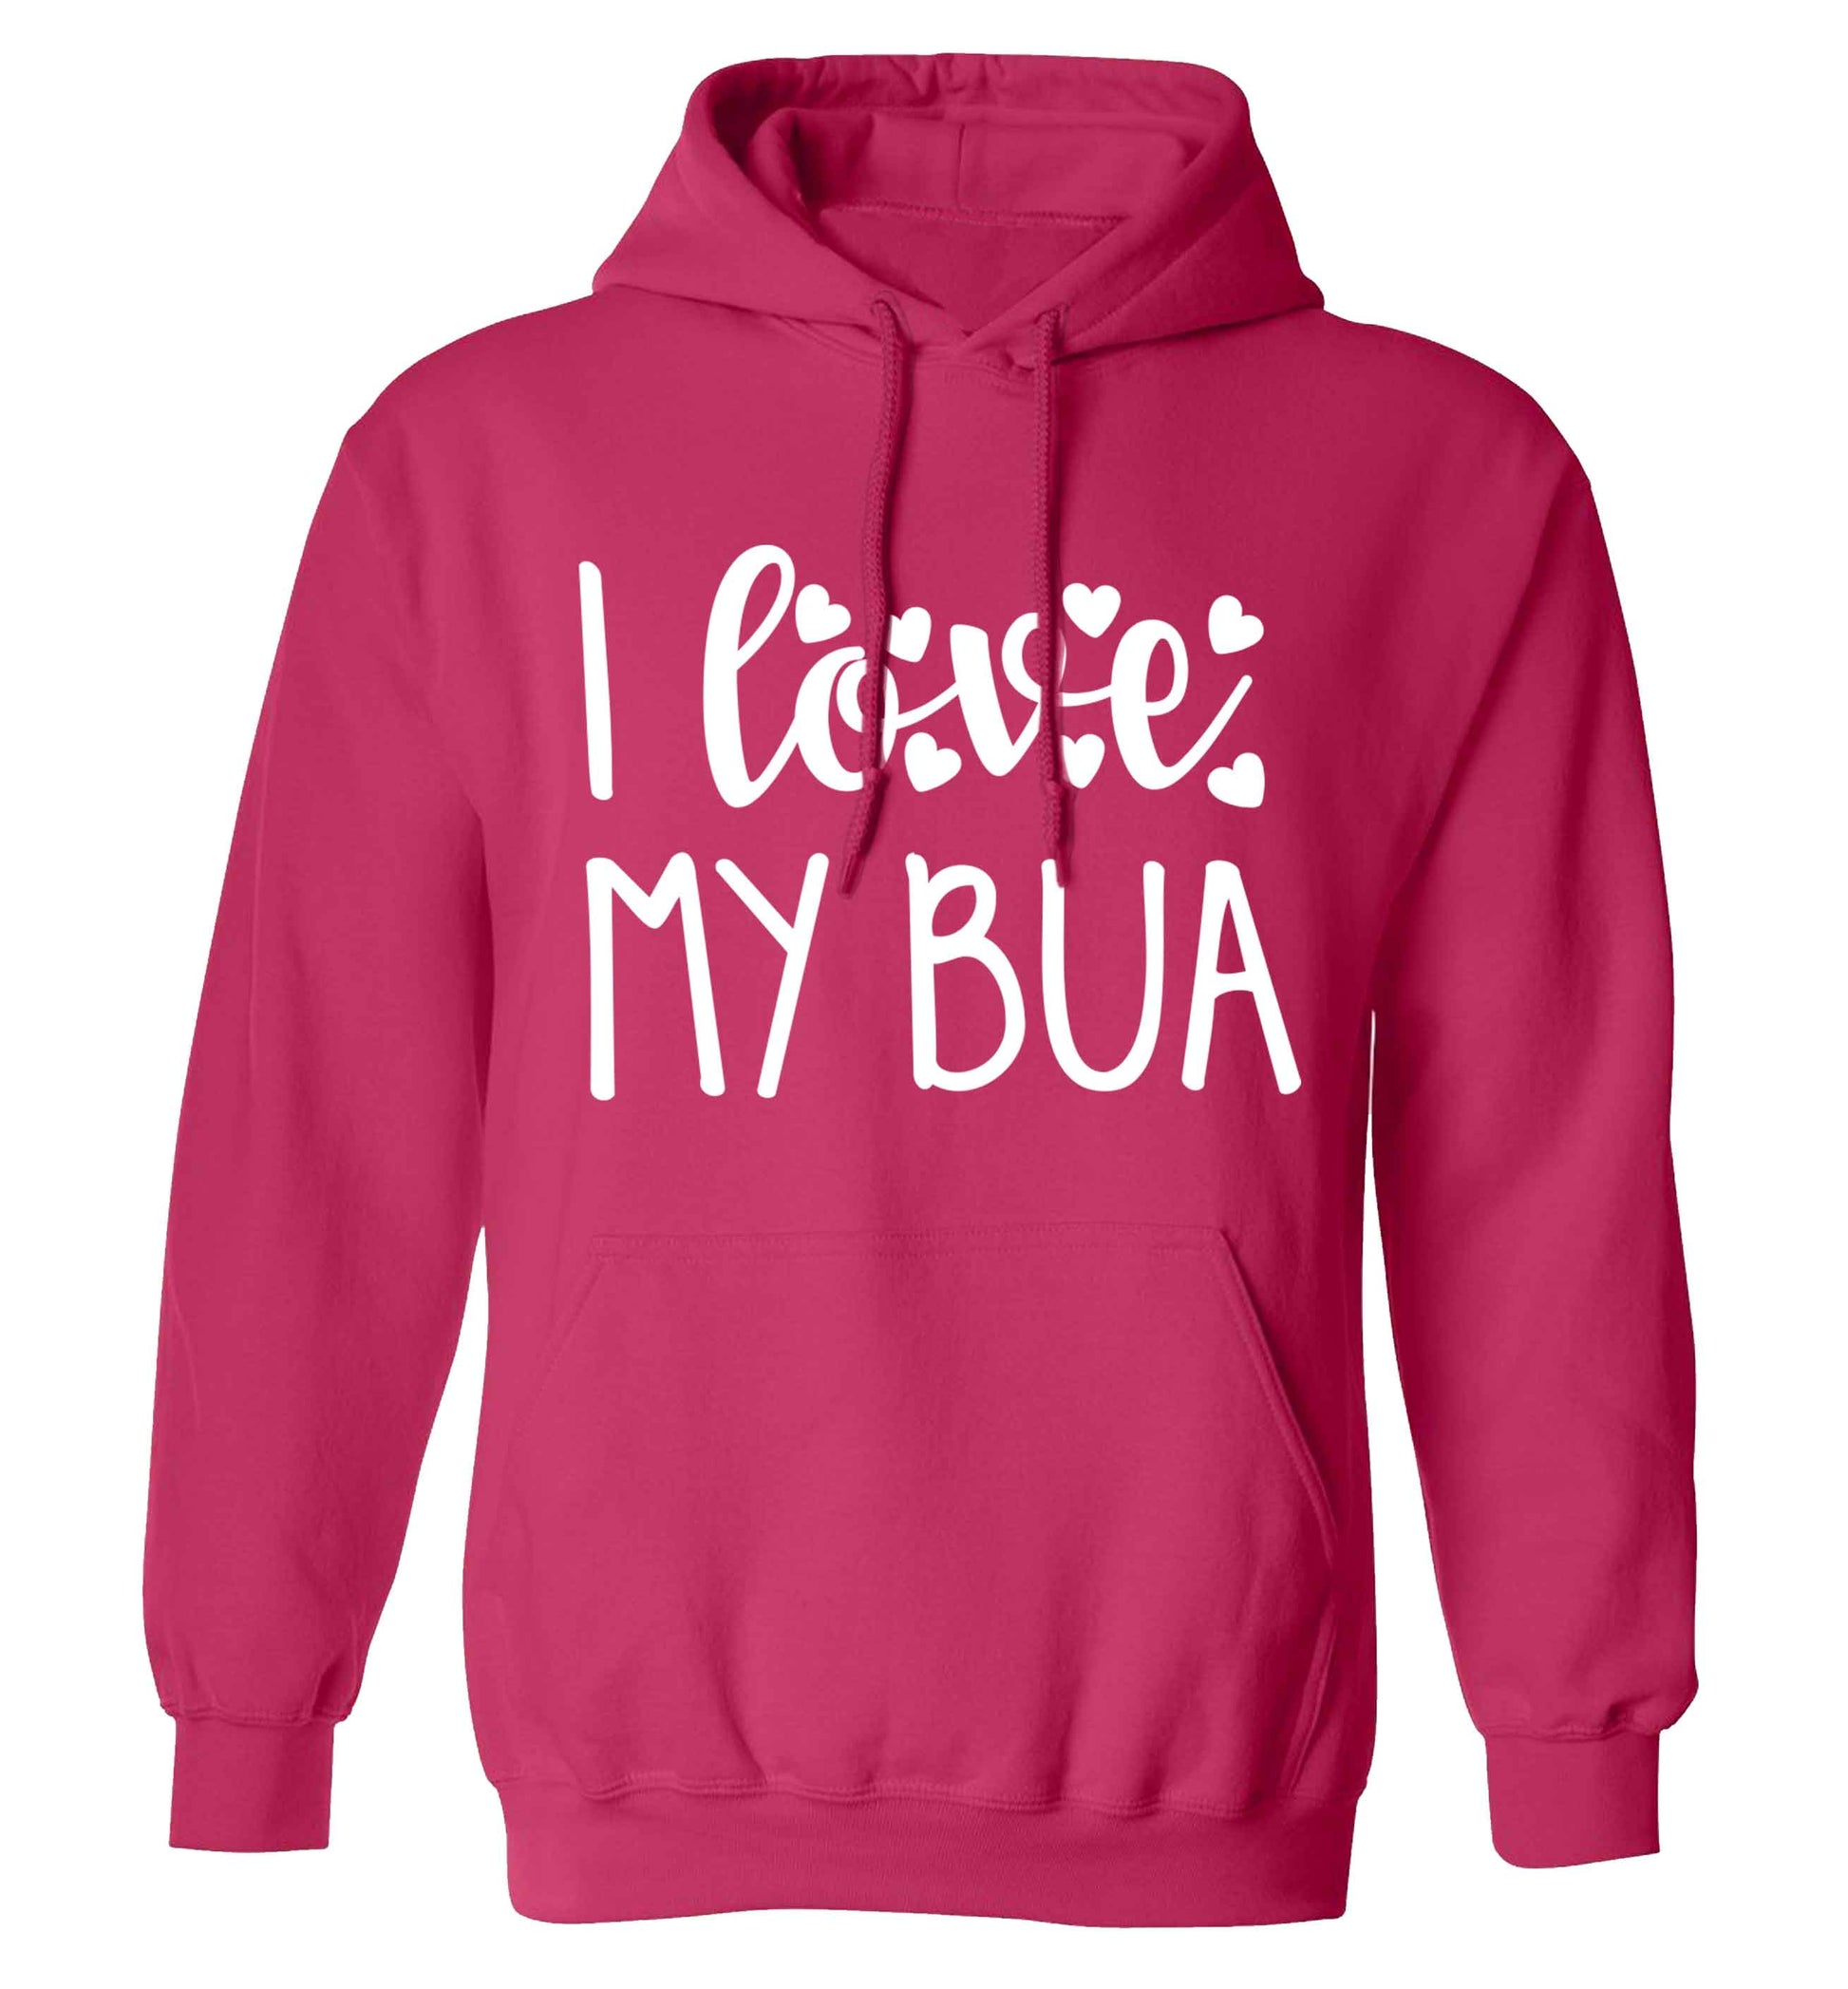 I love my bua adults unisex pink hoodie 2XL